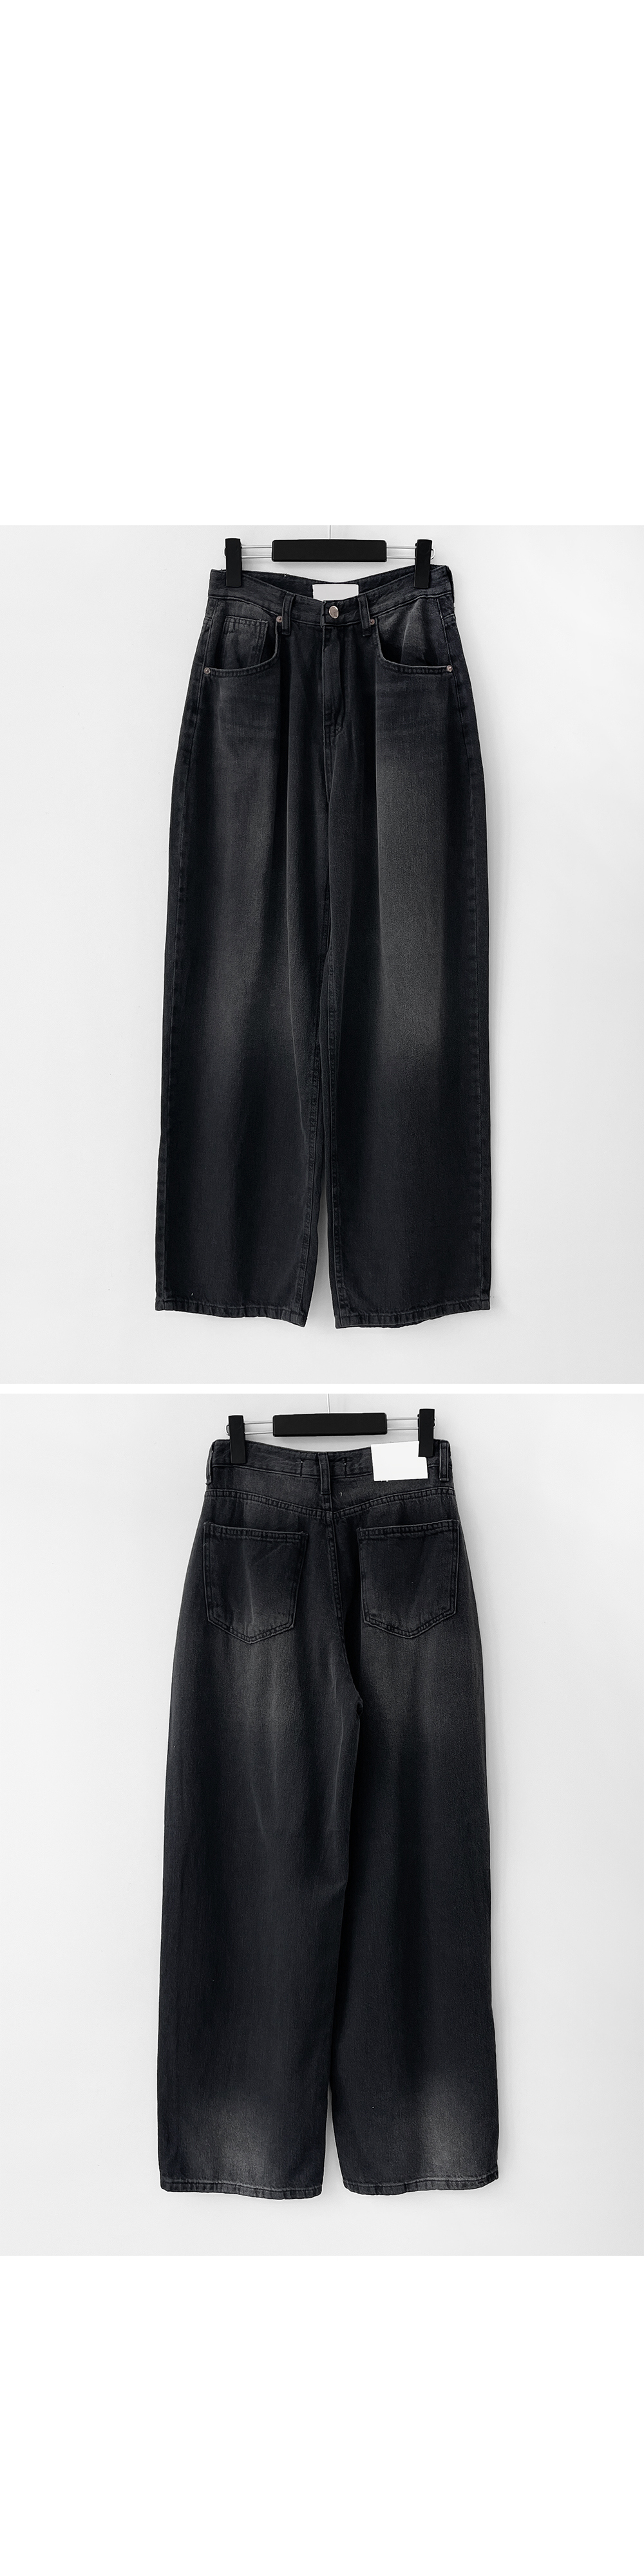 suspenders skirt/pants charcoal color image-S1L10